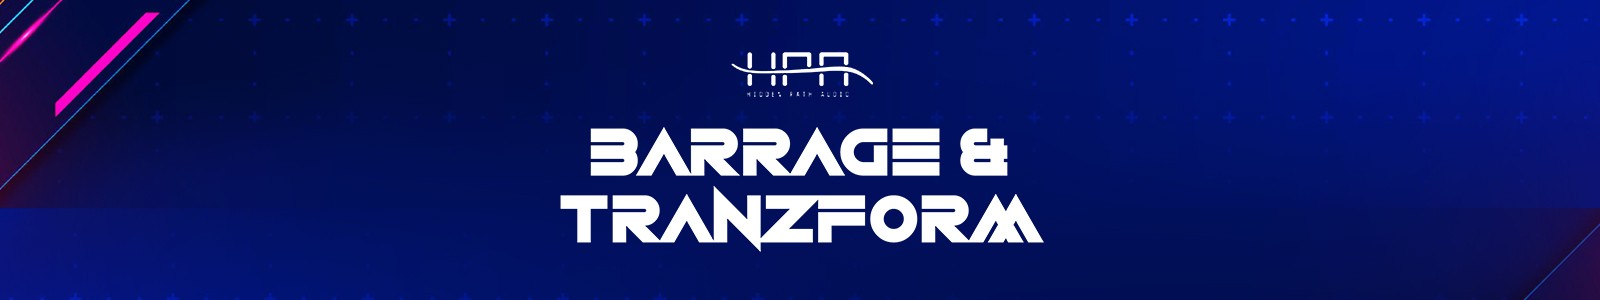 BARRAGE & TRANZFORM by HIDDEN PATH AUDIO